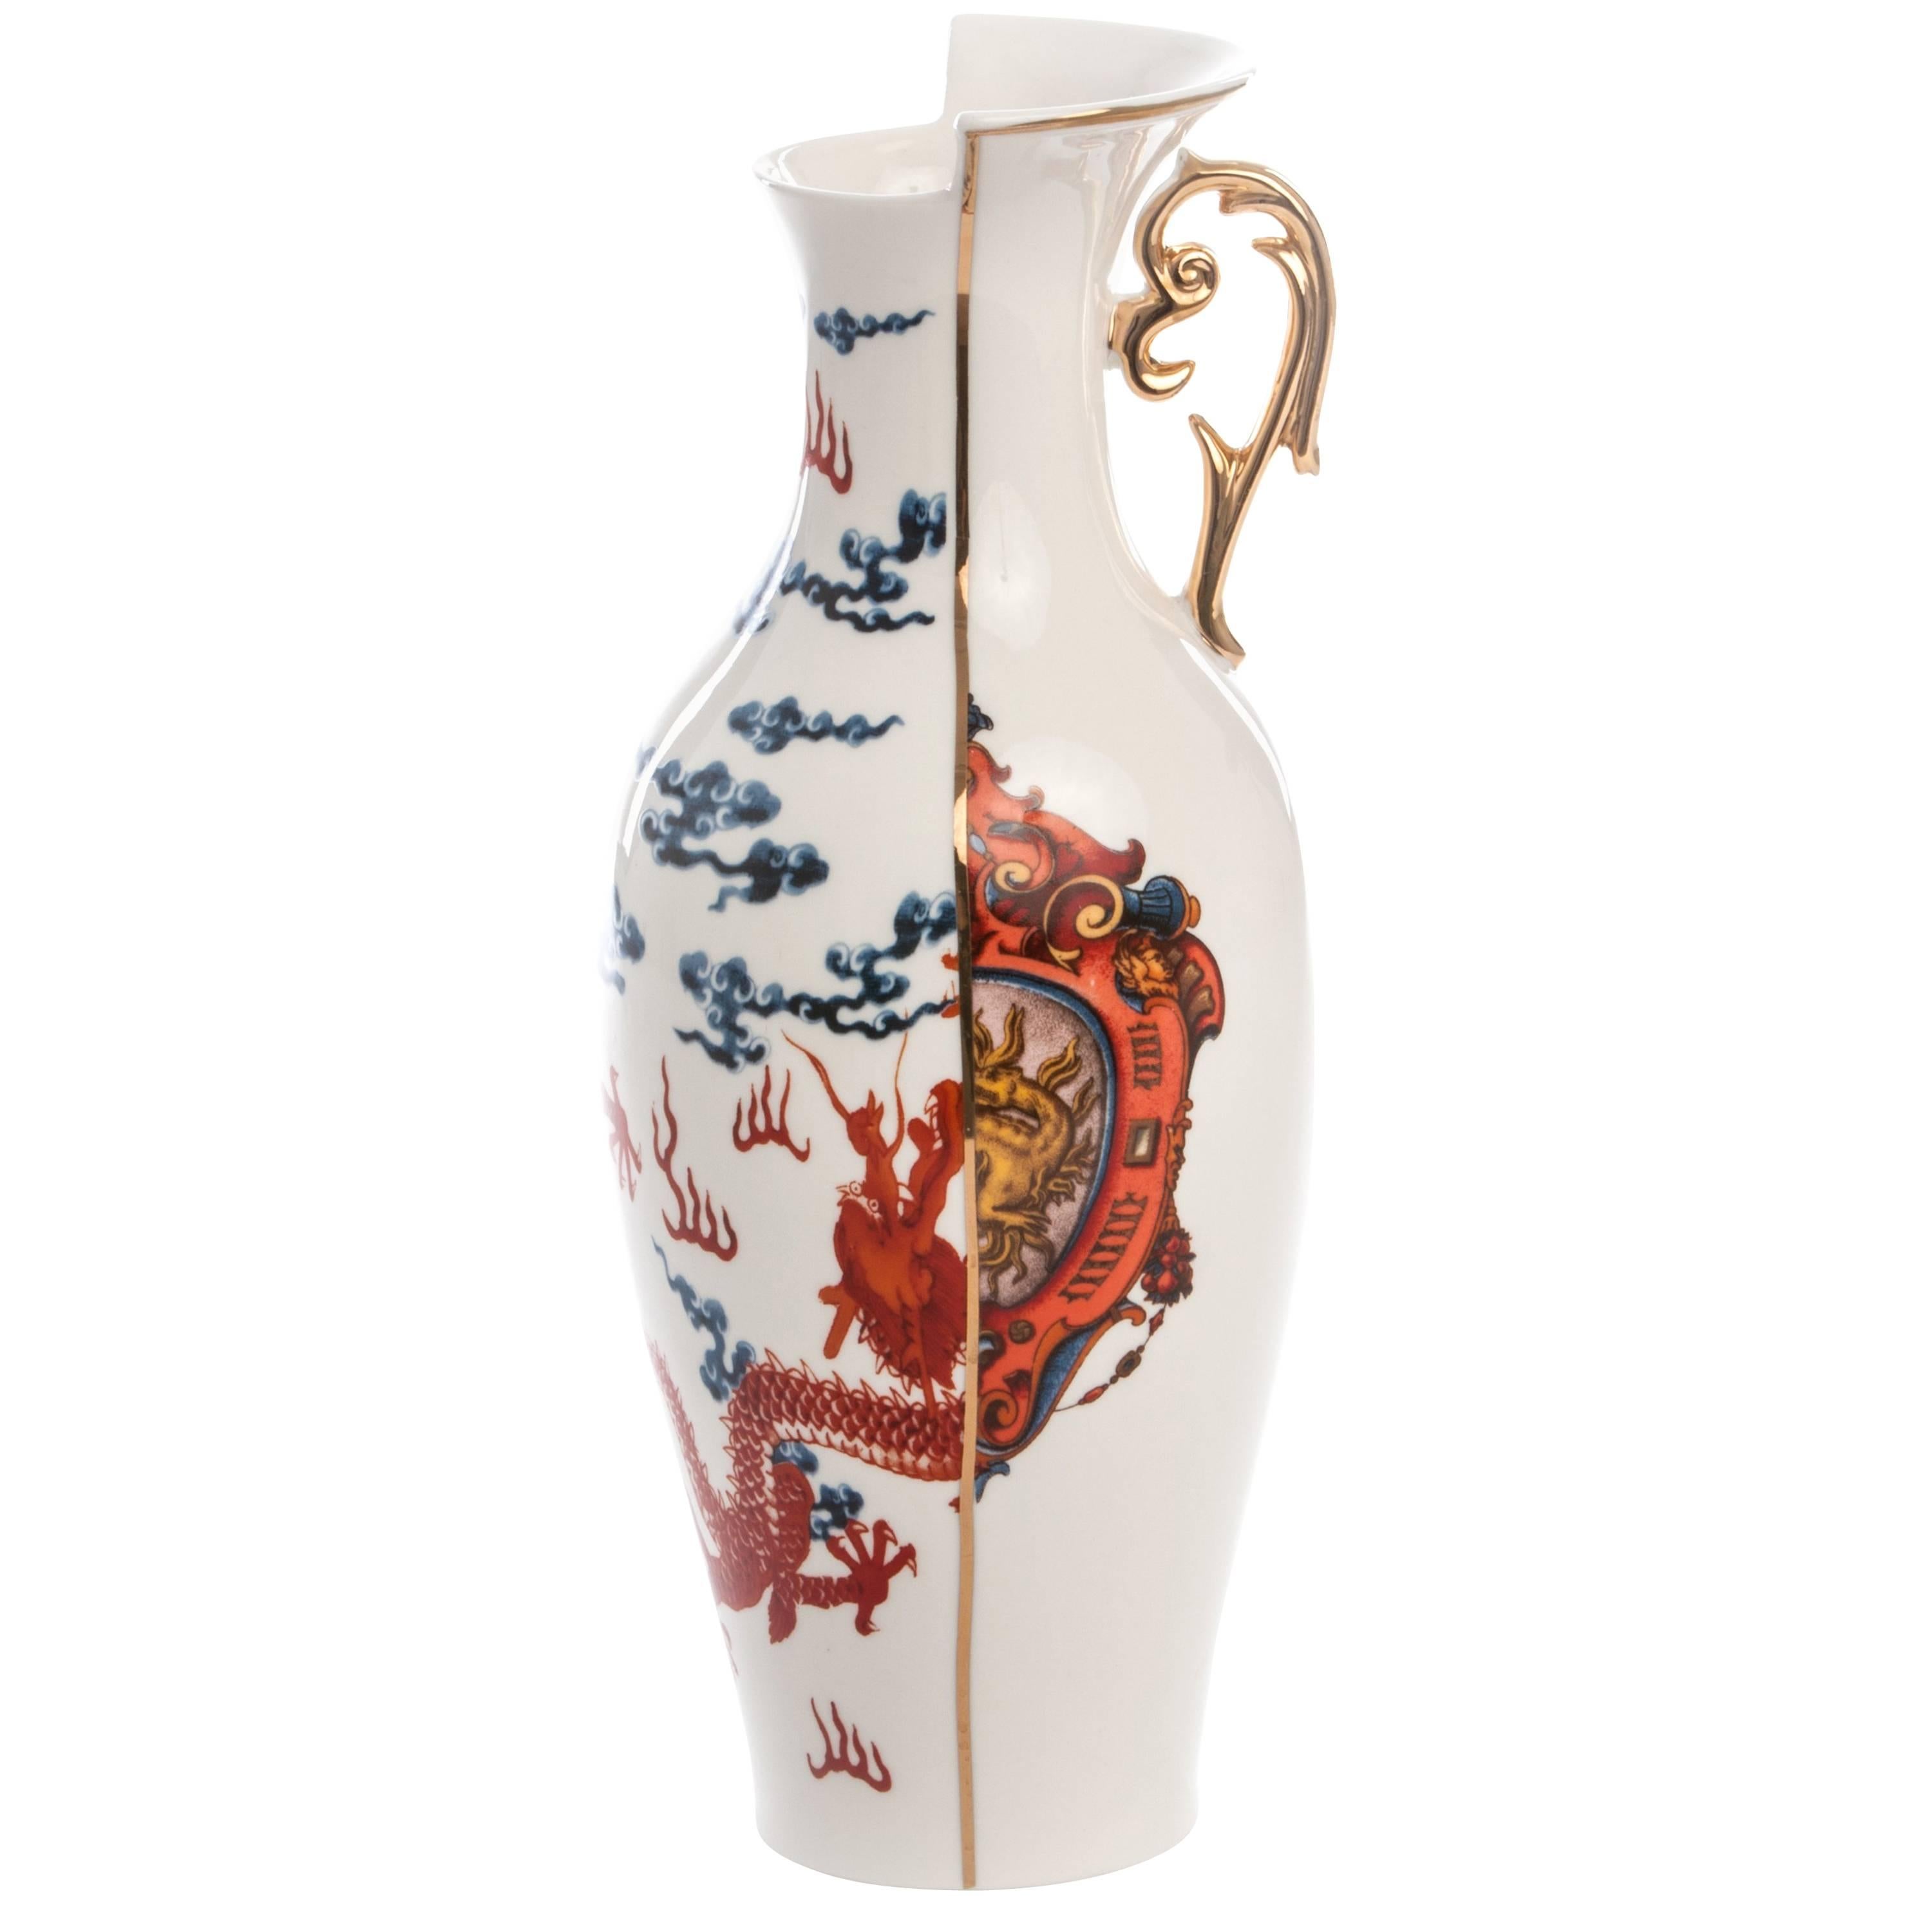 Seletti 'Hybrid-Adelma' Vase in  Porcelain For Sale